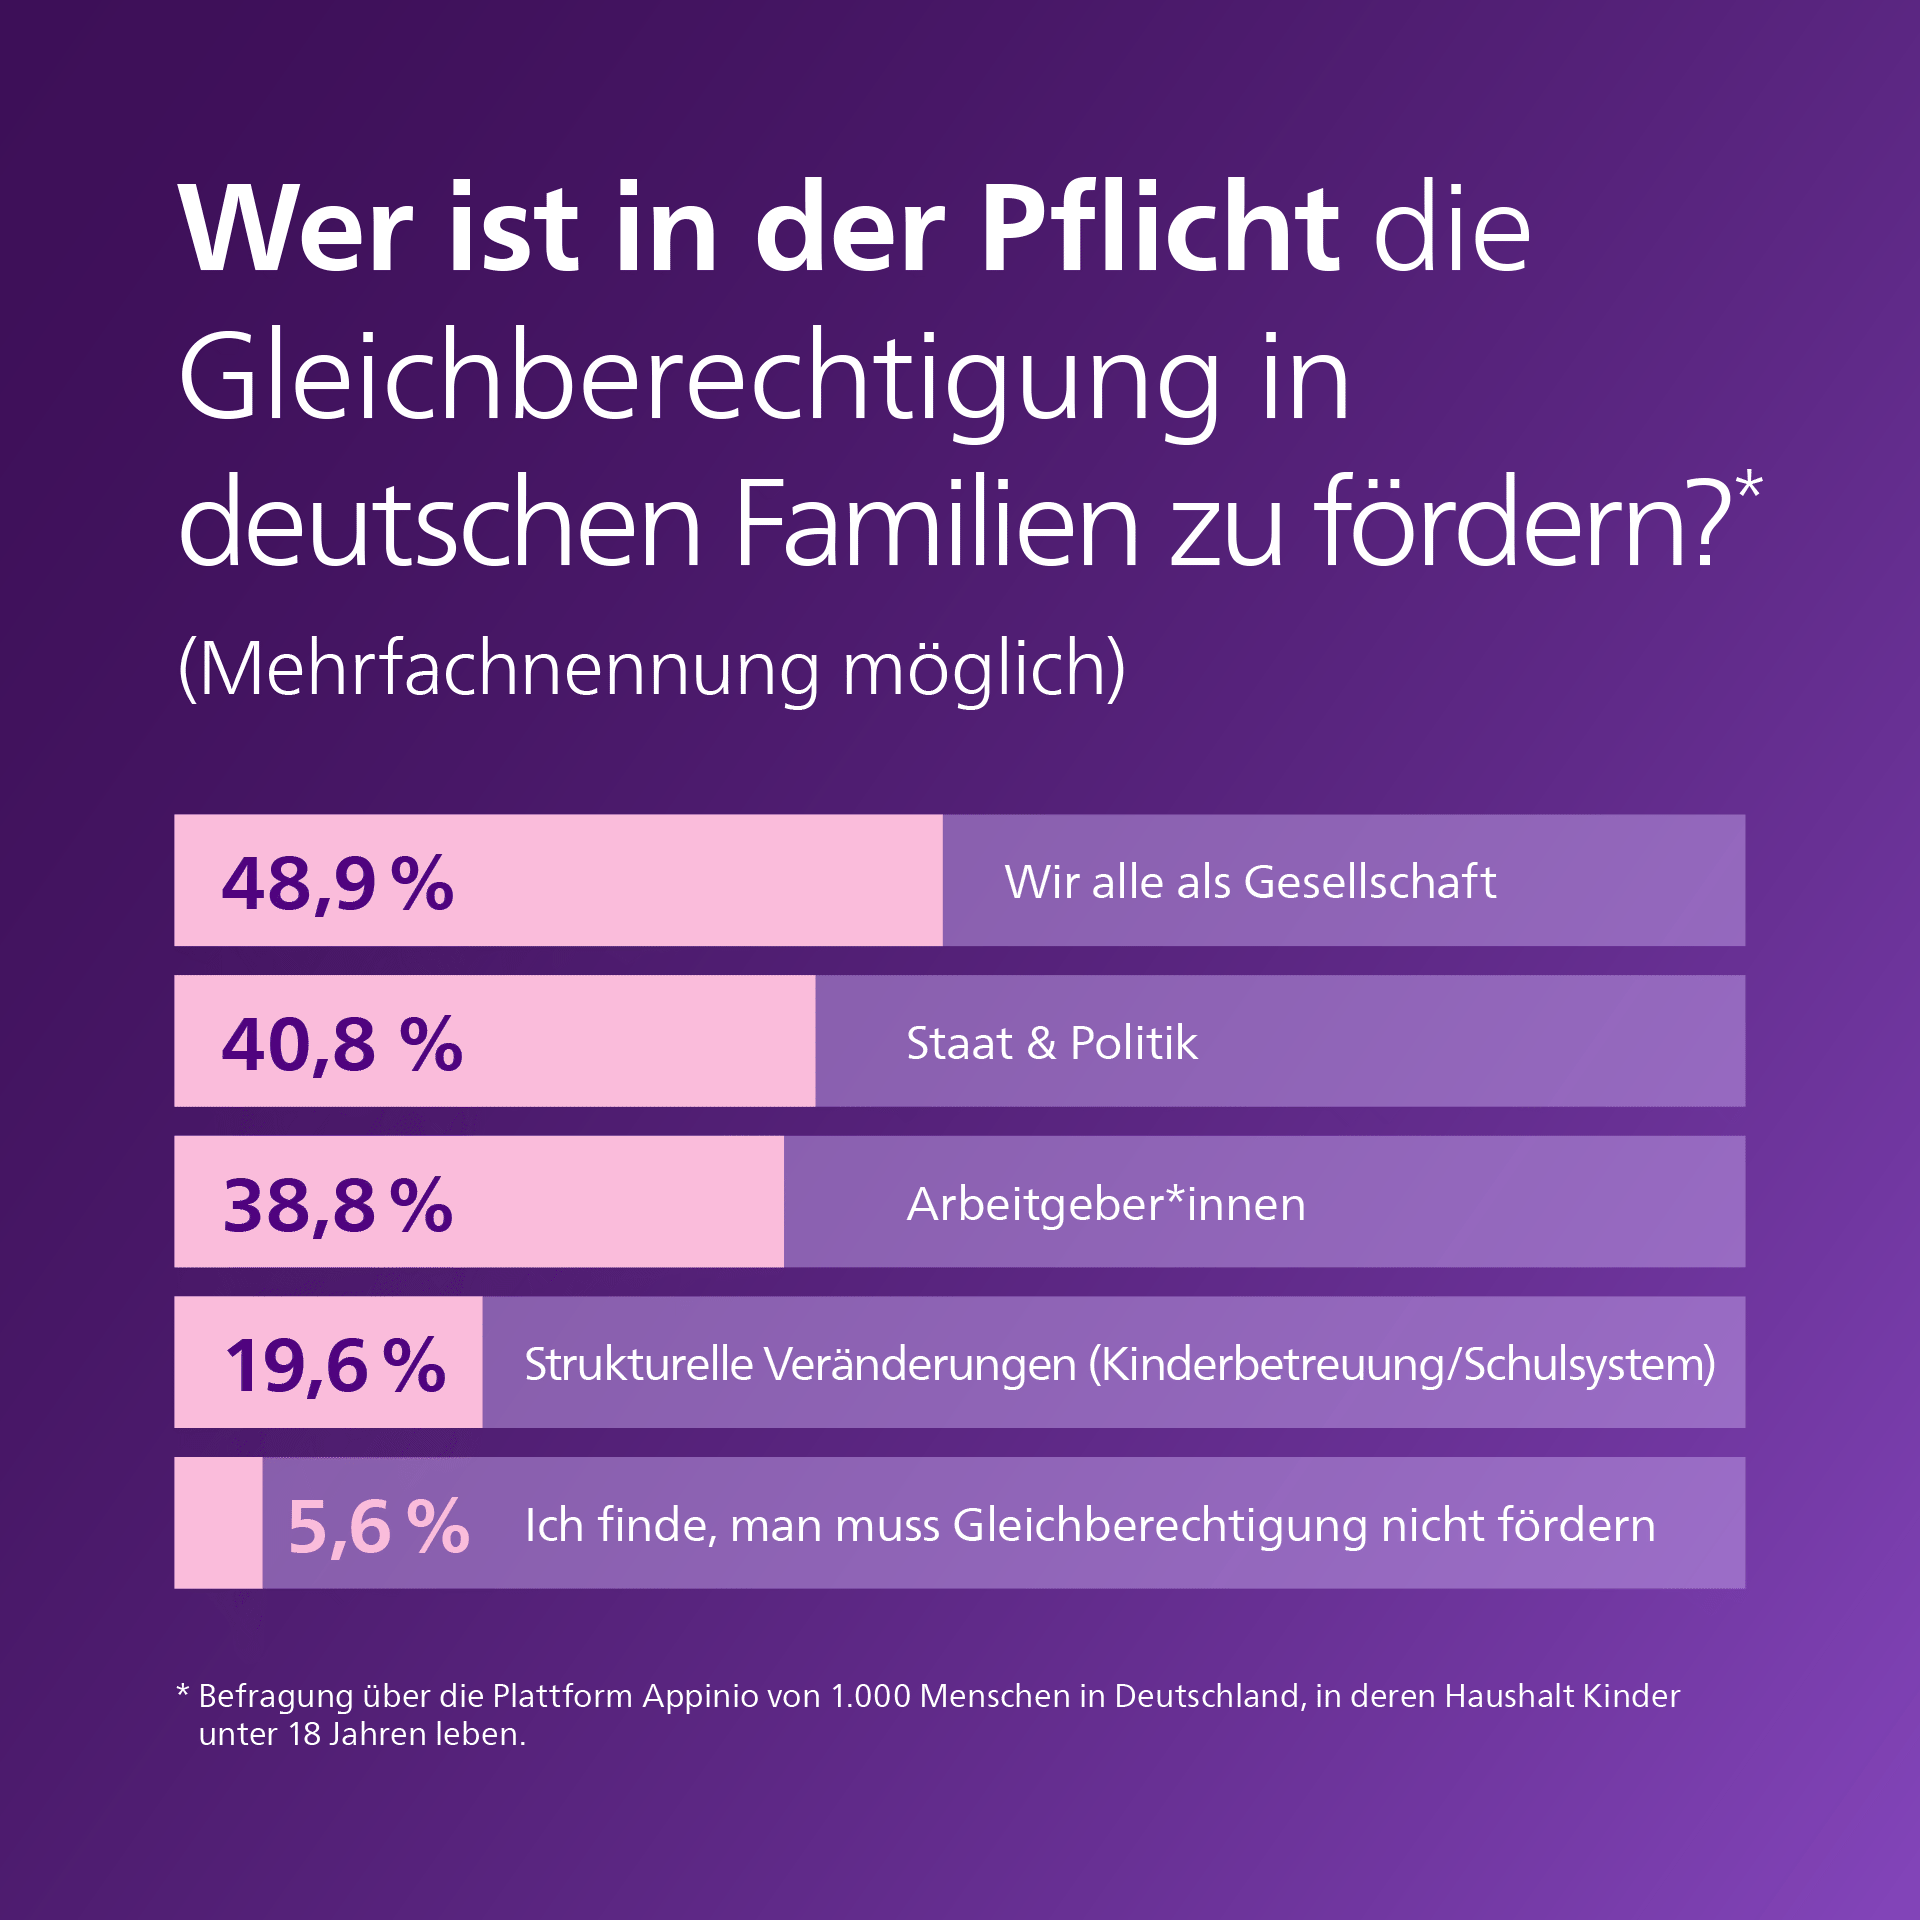 Philips Infografik – Gleichberechtigung 2